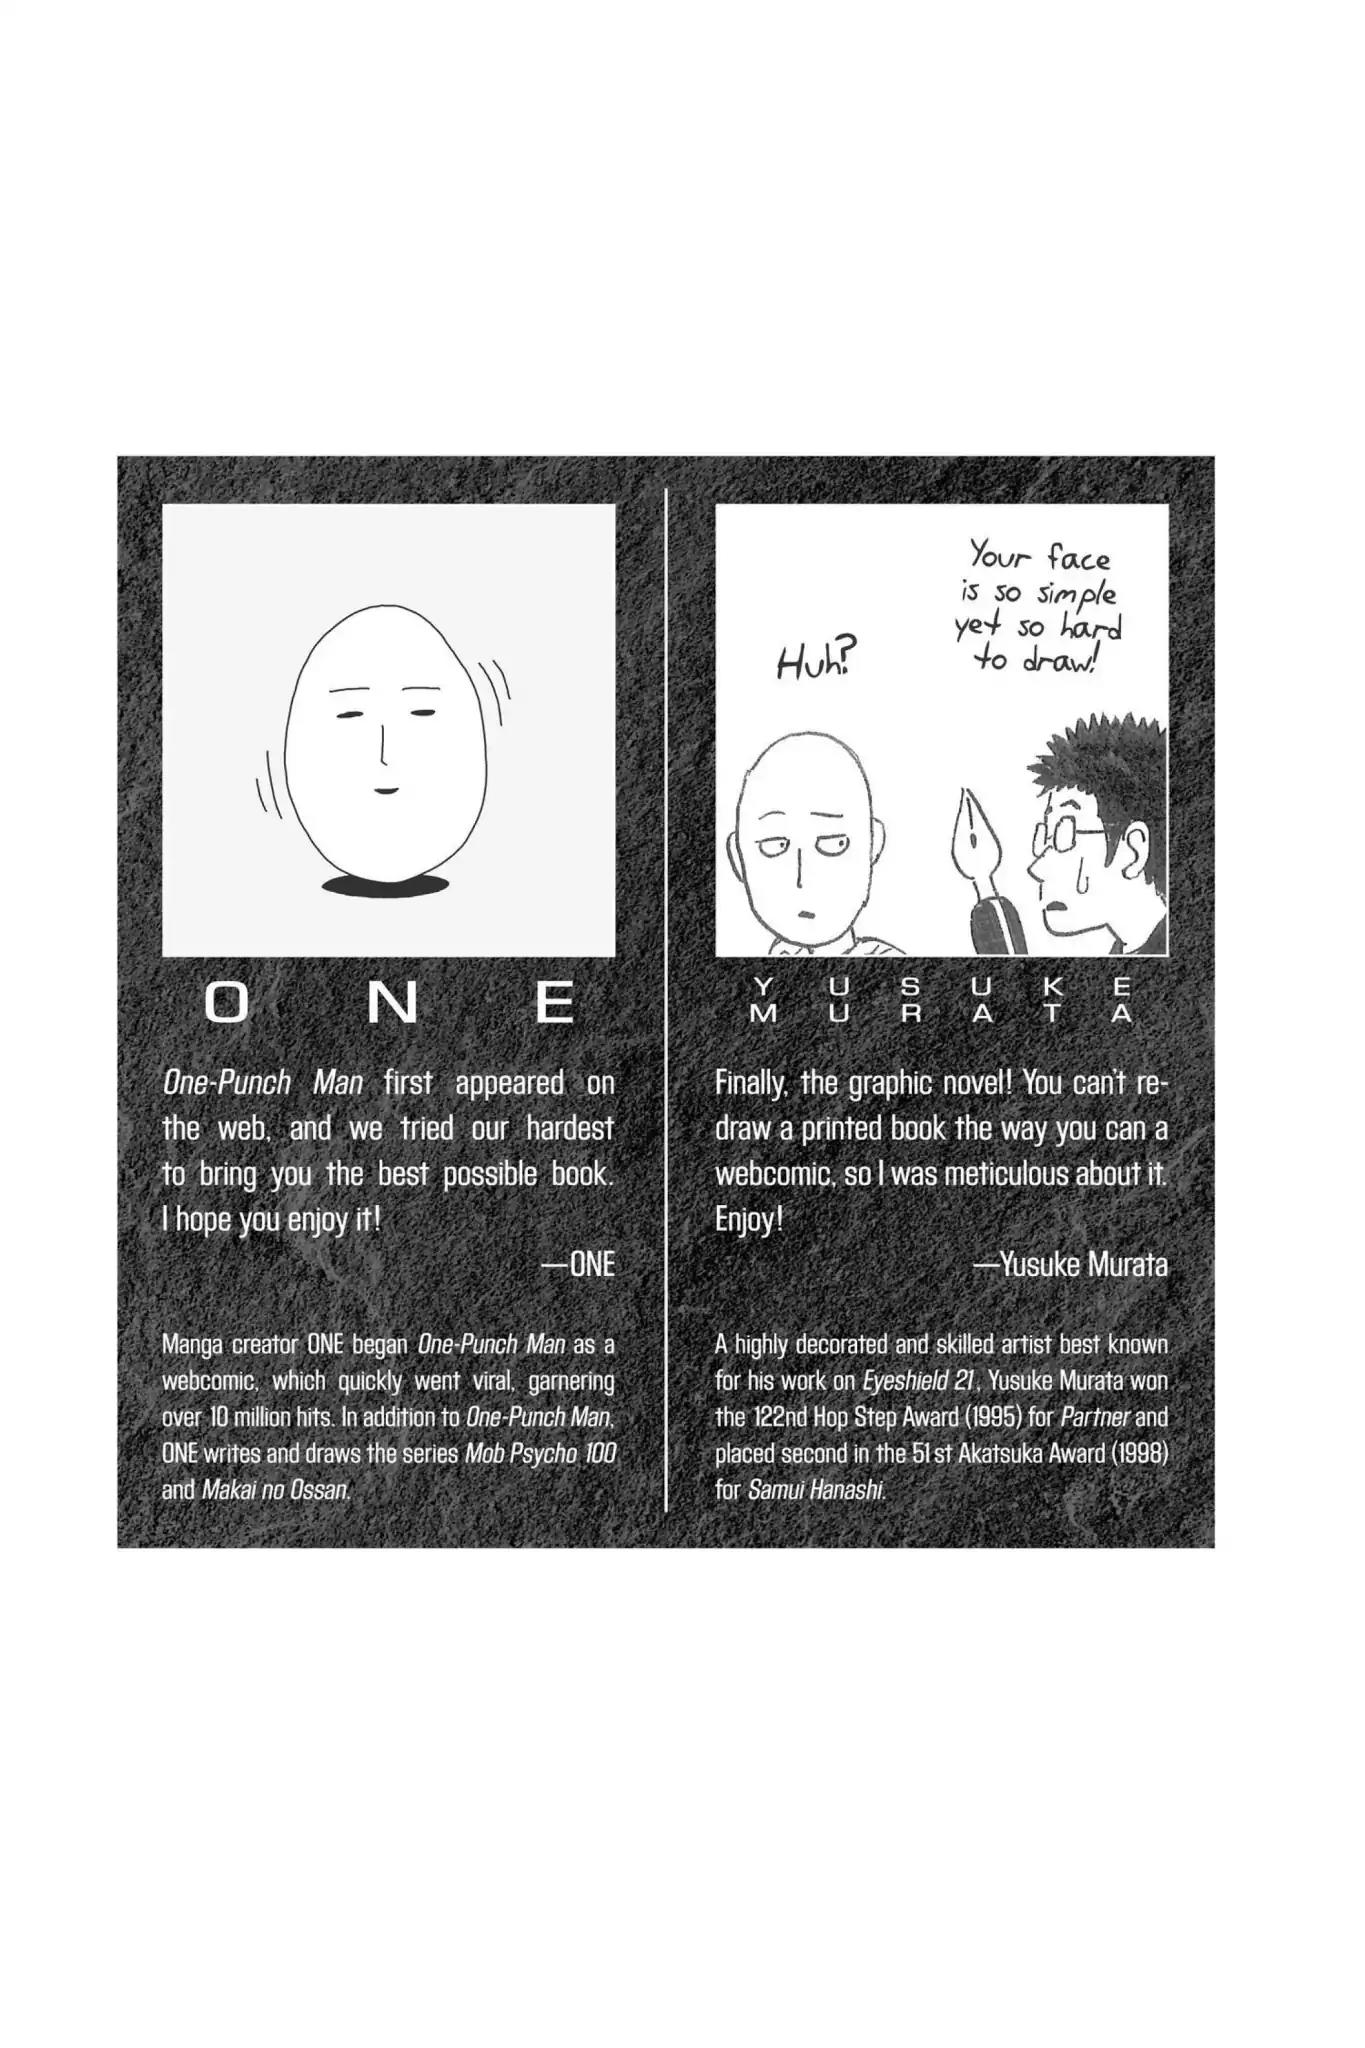 One Punch Man Manga Manga Chapter - 1 - image 2